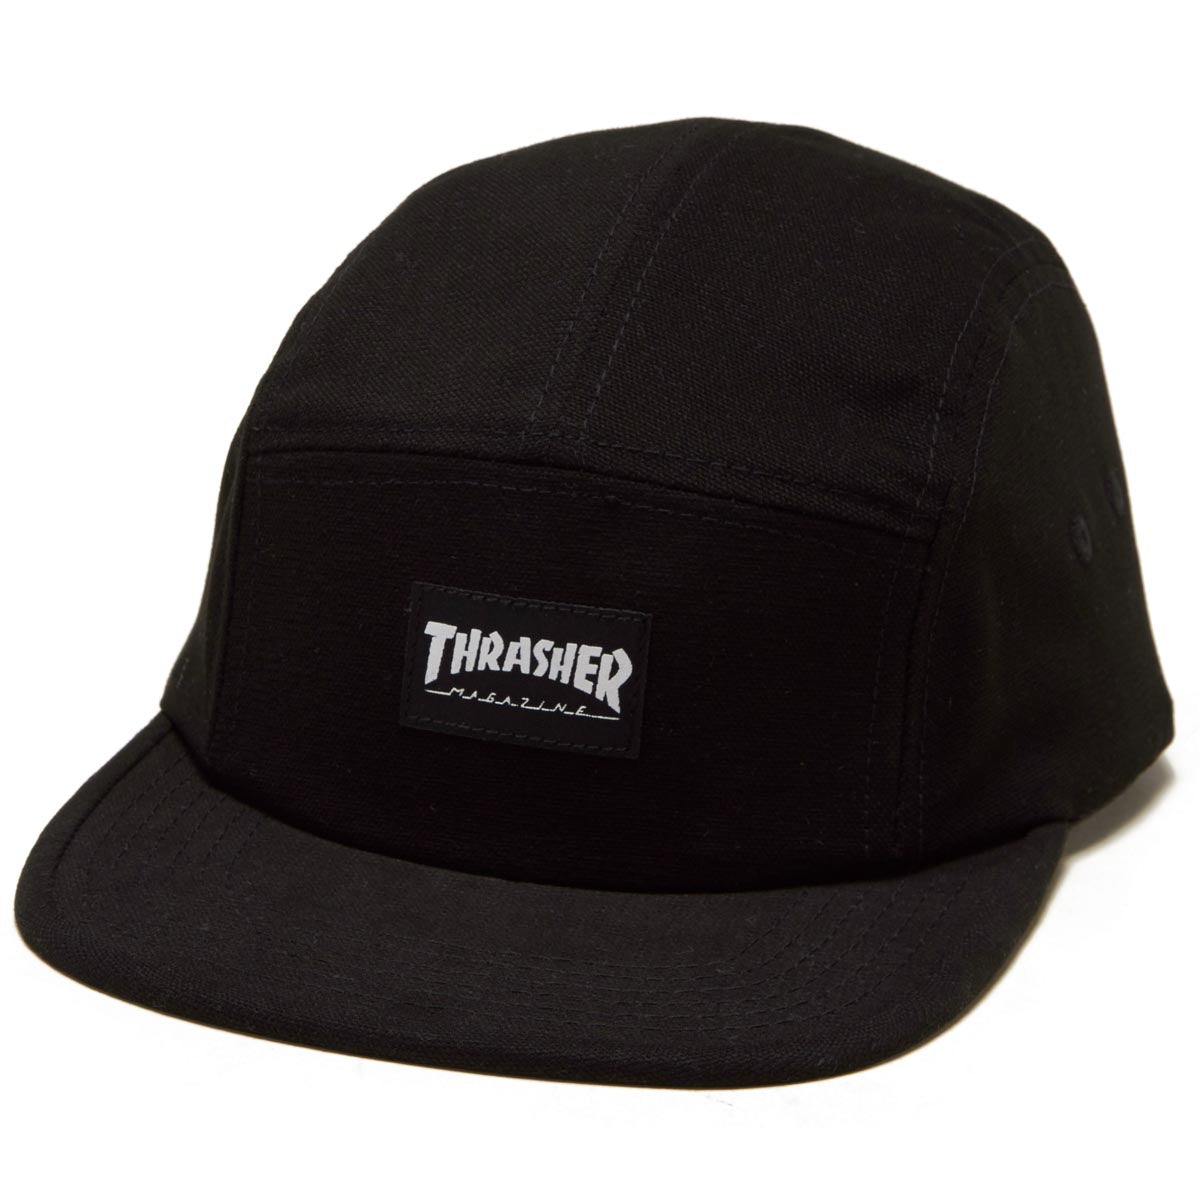 Thrasher Logo 5 Panel Hat - Black image 1